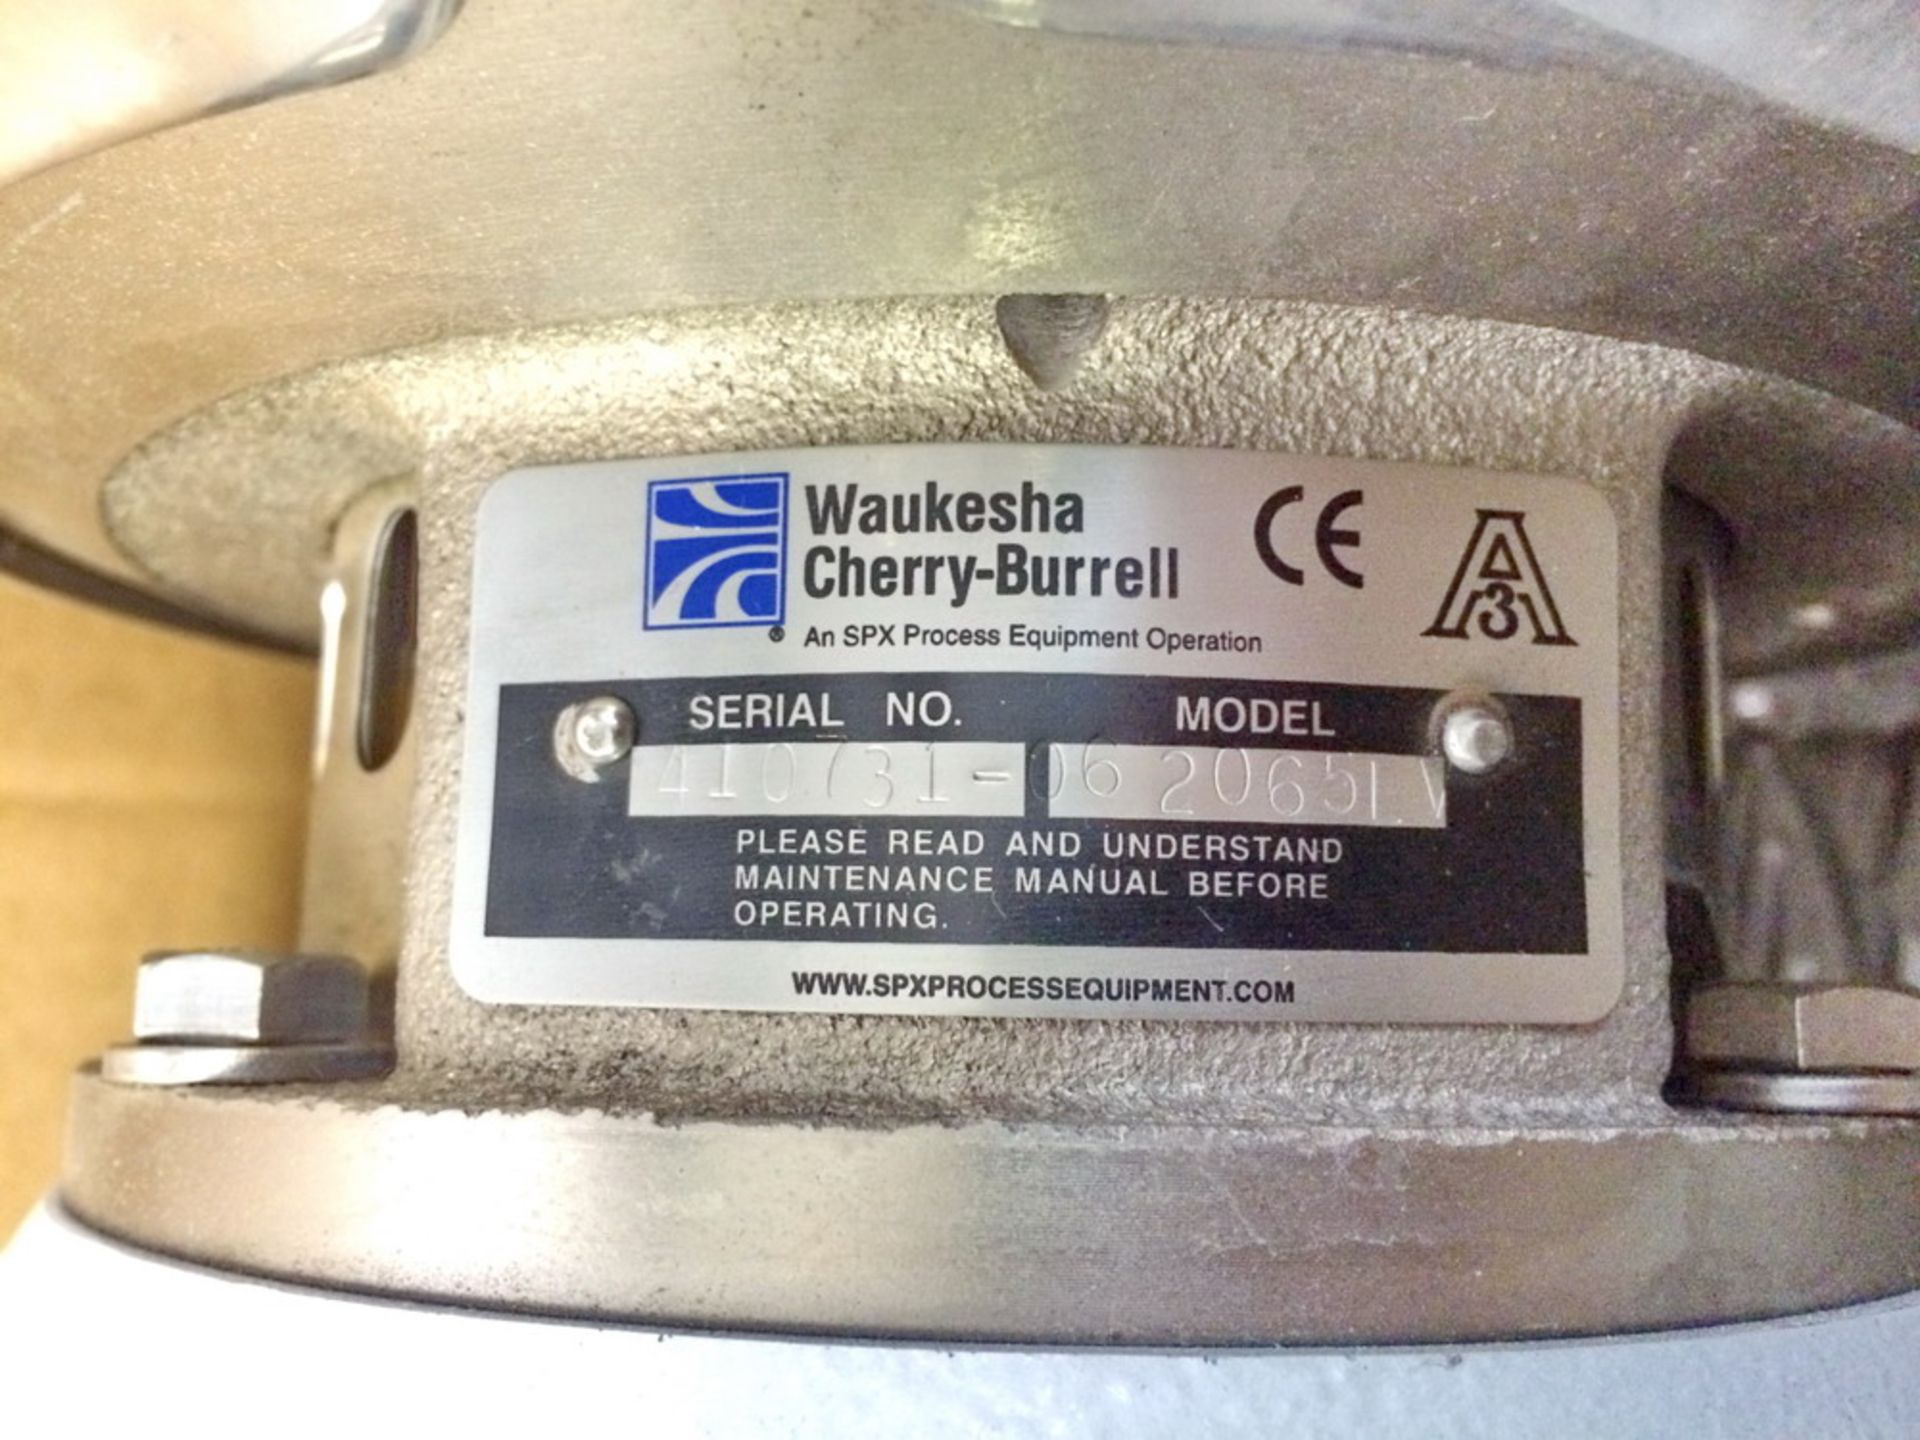 1-New/Unused Waukesha/Cherry Burrell Centrifugal Pump Model 062065LV, S/N 410731 - Image 6 of 6